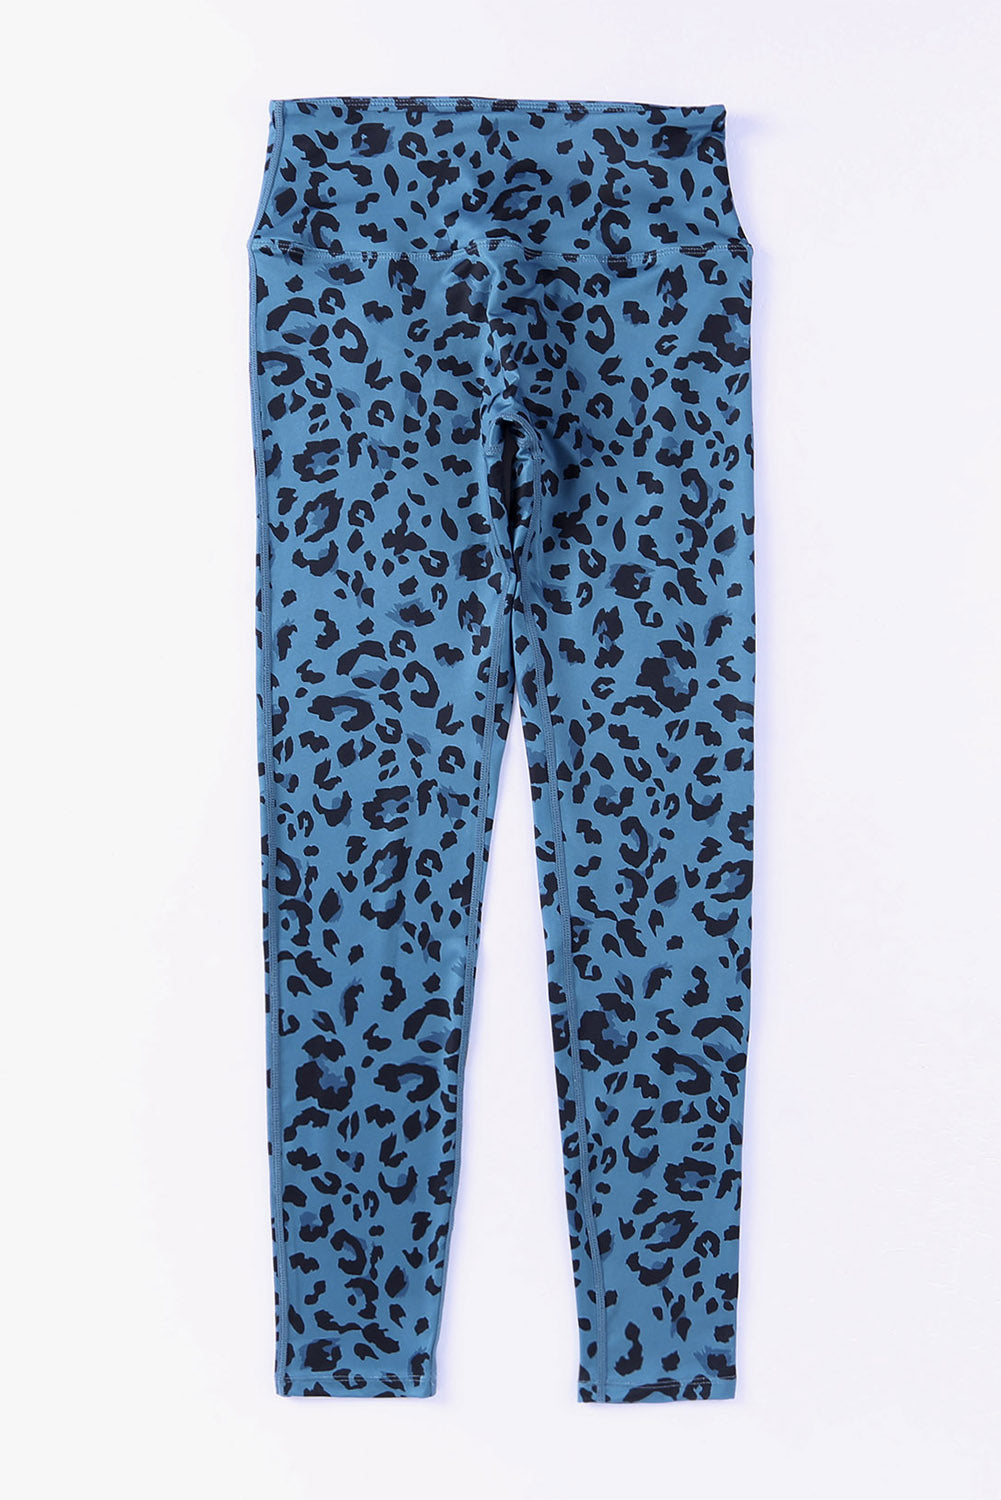 Leopard Print Wide Waistband Leggings